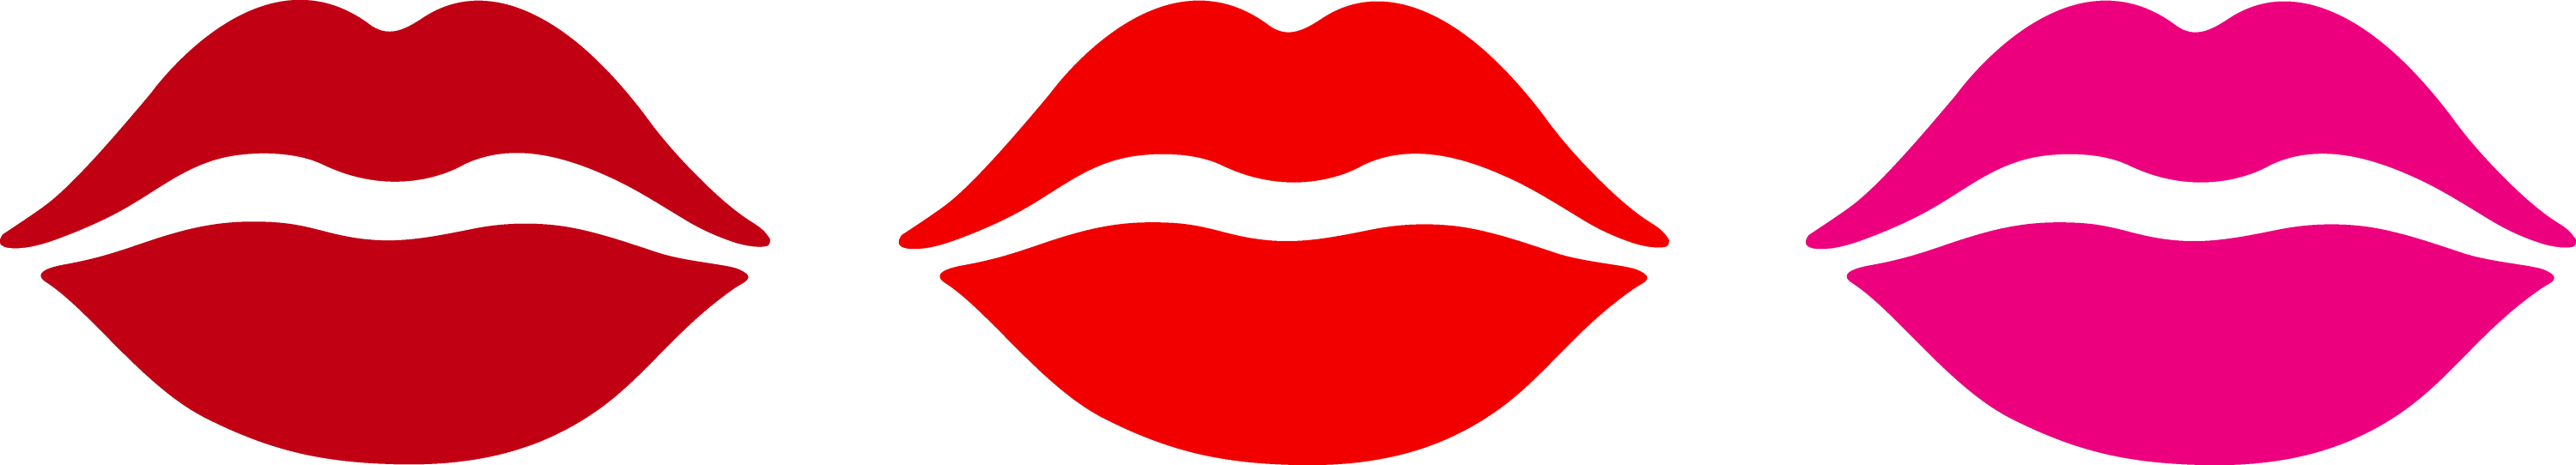 clipart kissing lips - photo #31